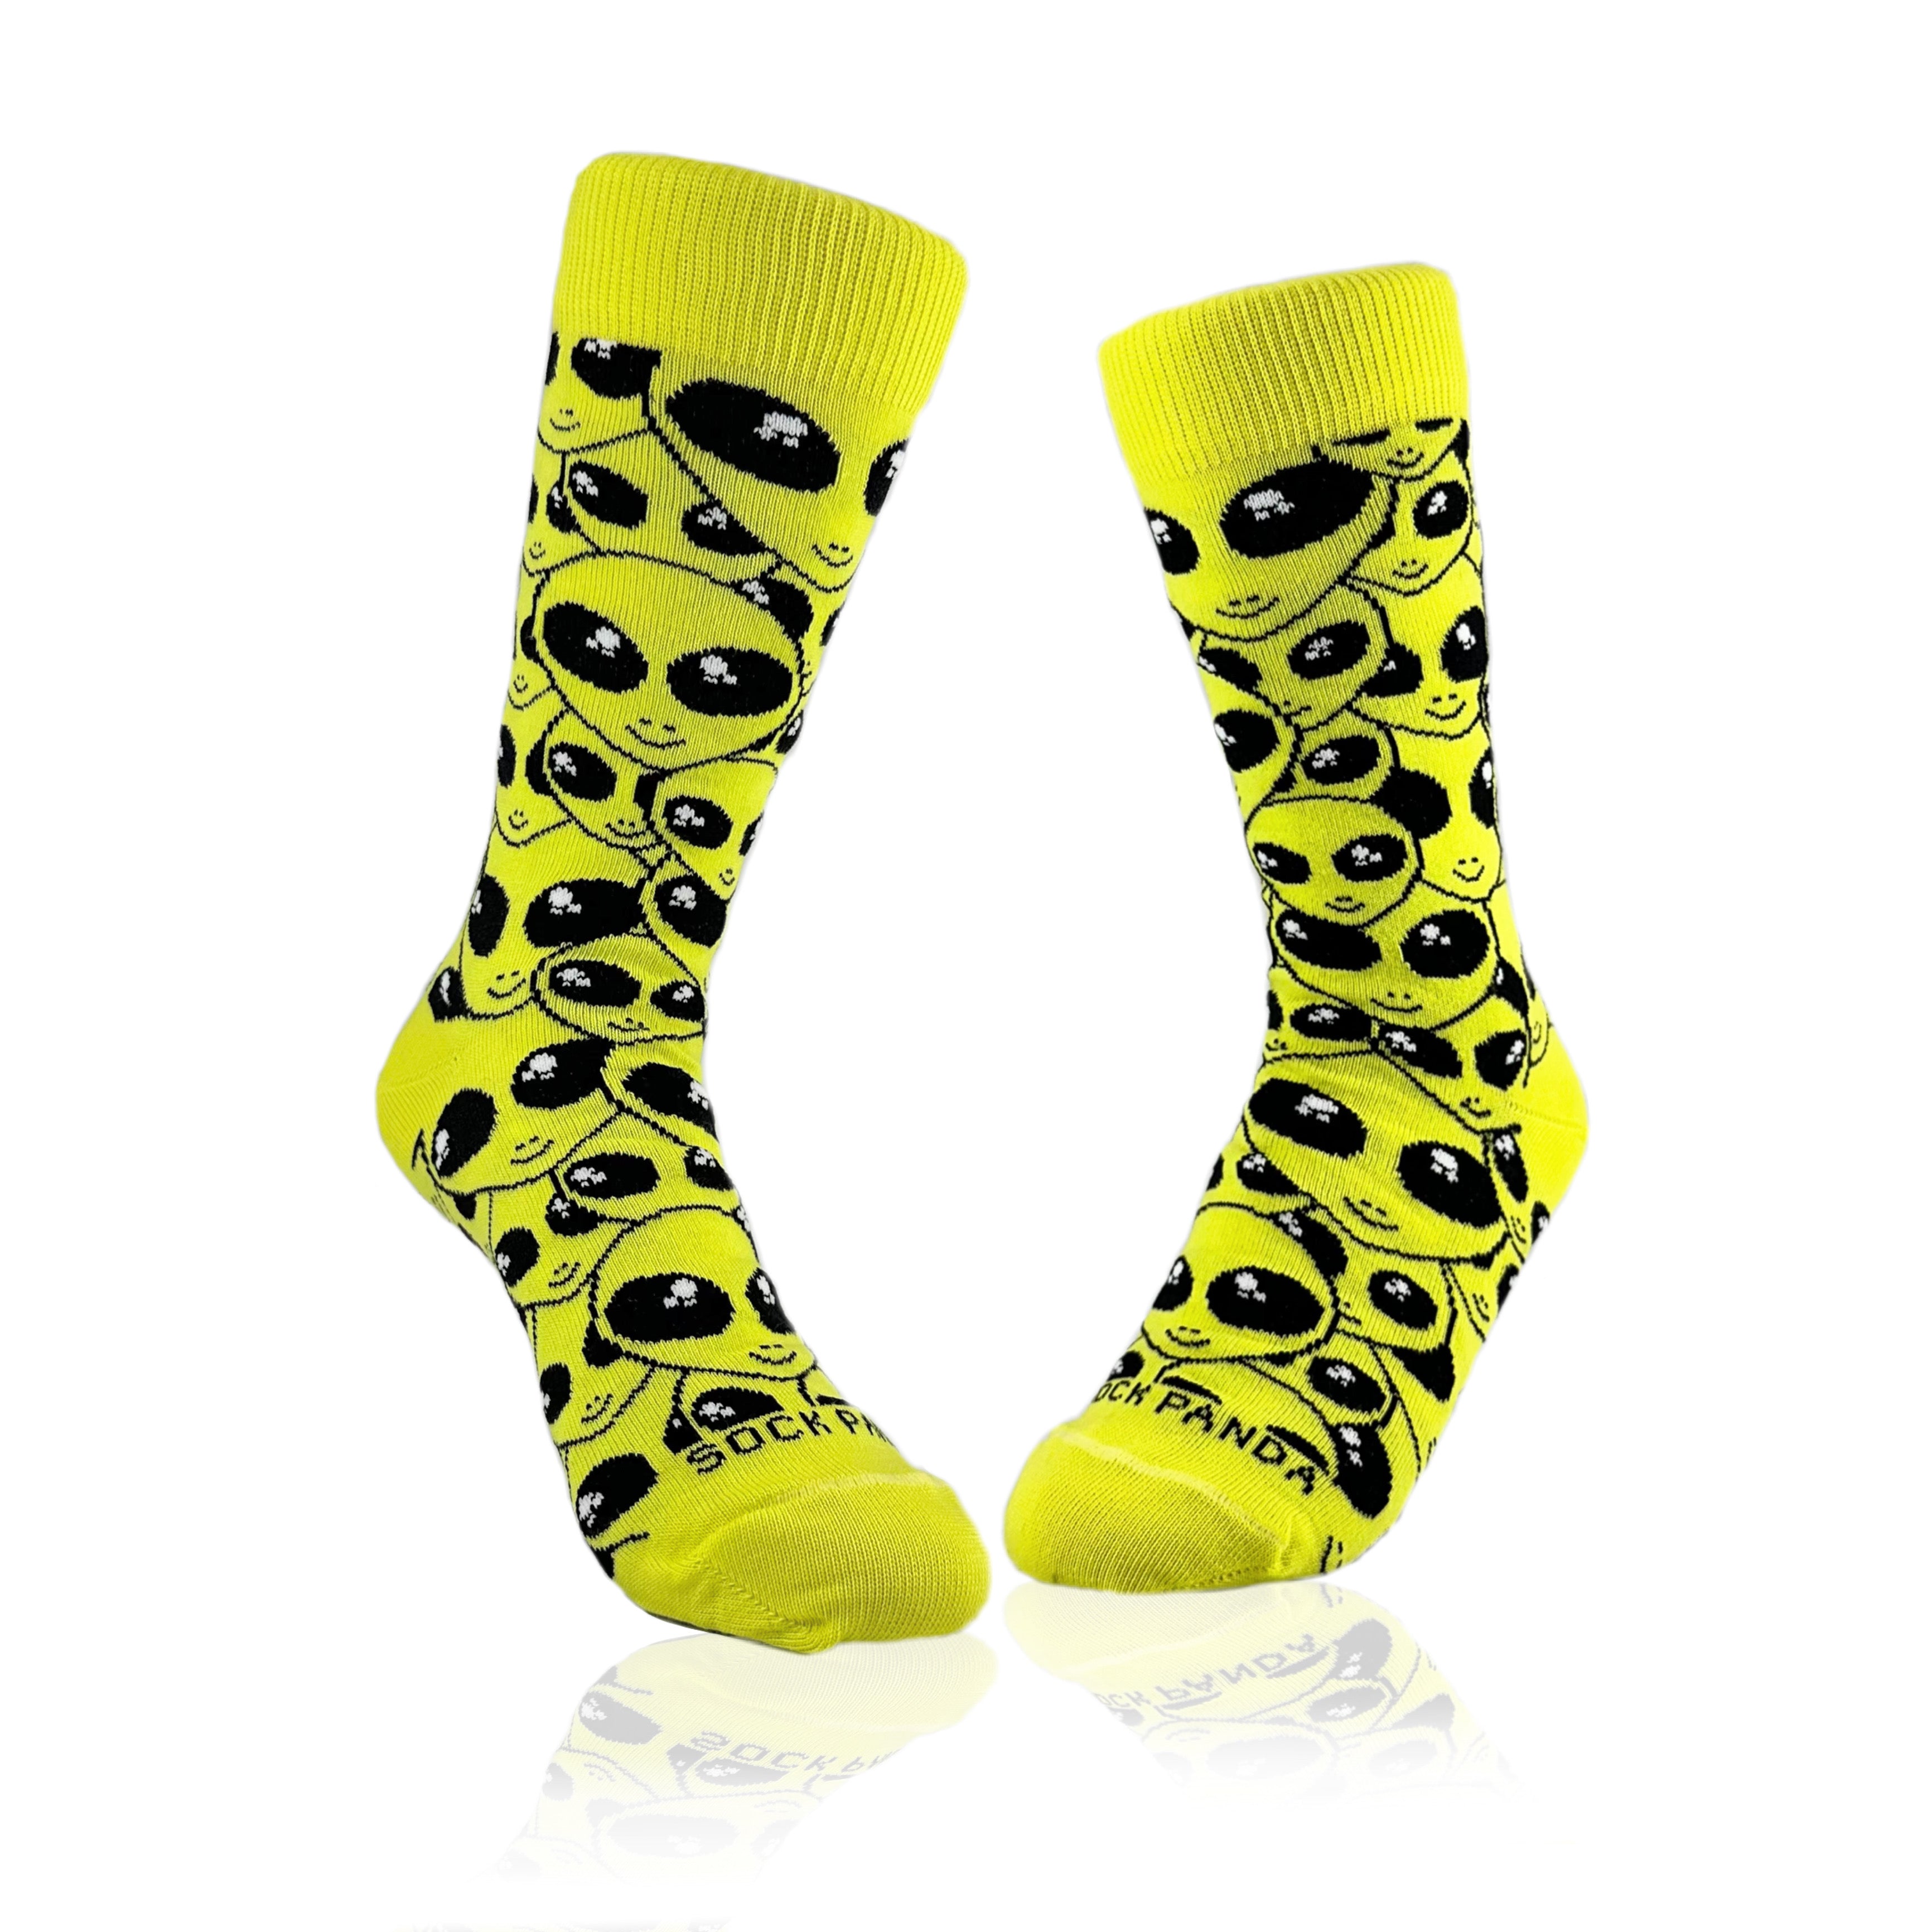 Alien Face Pattern Socks from the Sock Panda (Adult Small)